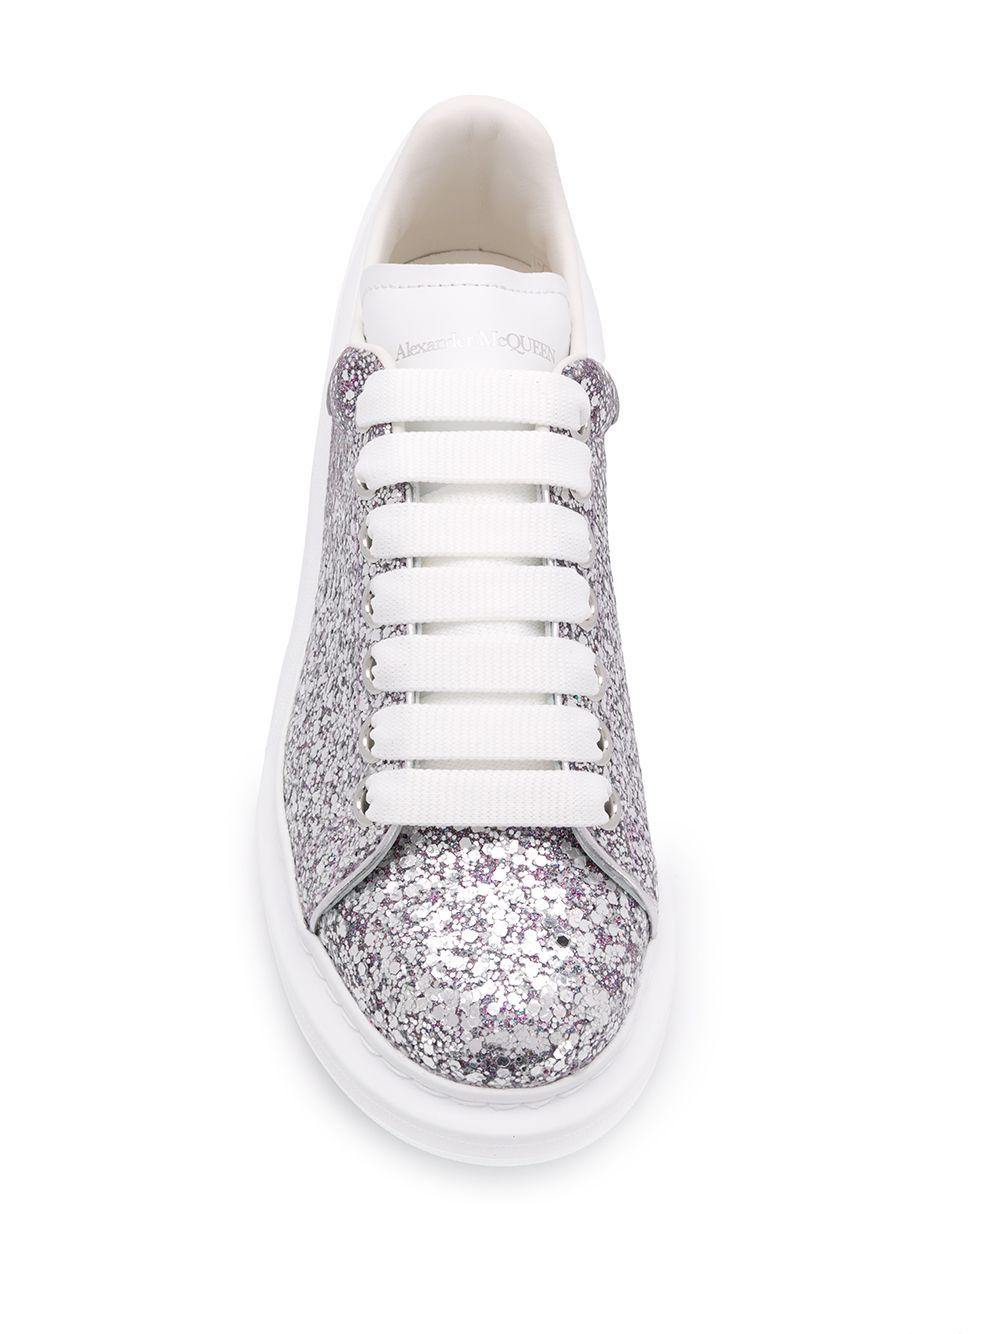 Alexander McQueen Leather Oversized Glitter Sneakers in Silver ...